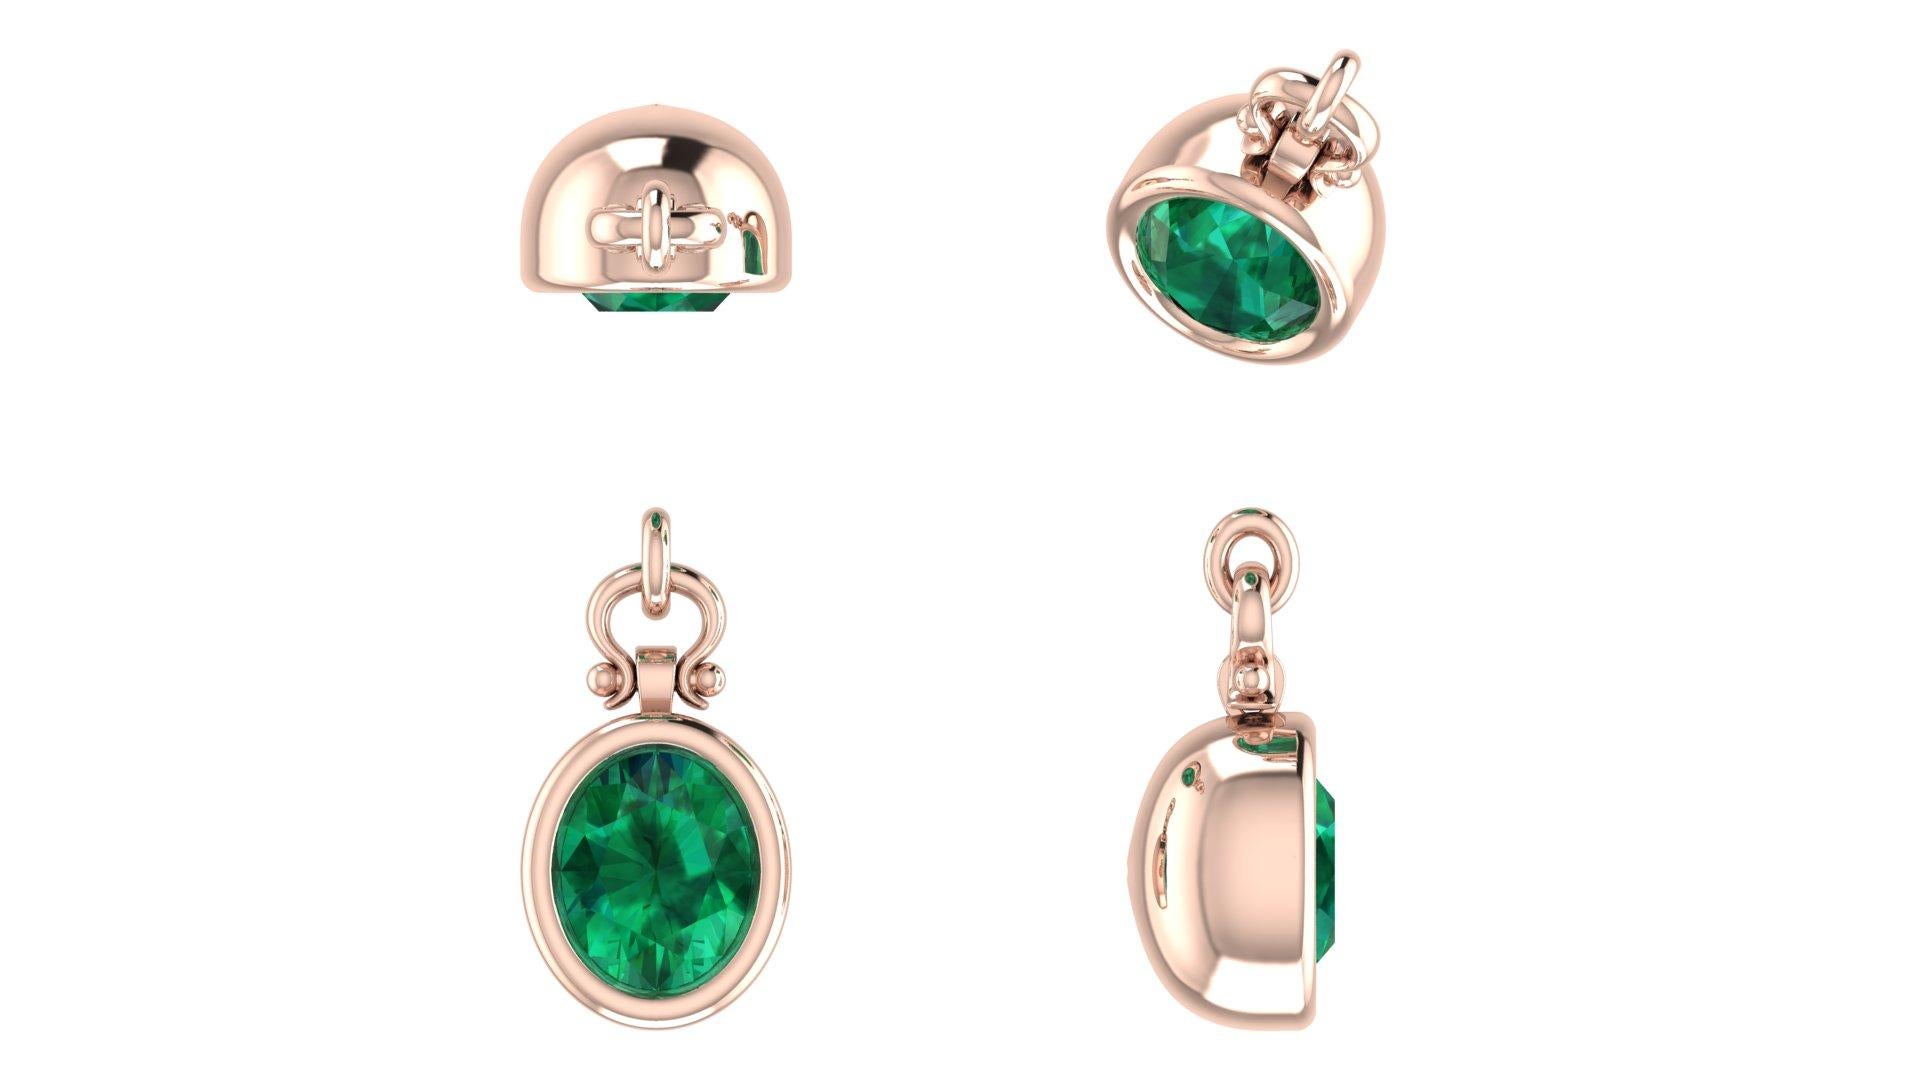 Women's IGITL Certified 2.38 Carat Oval Cut Emerald Pendant Necklace in 18K For Sale